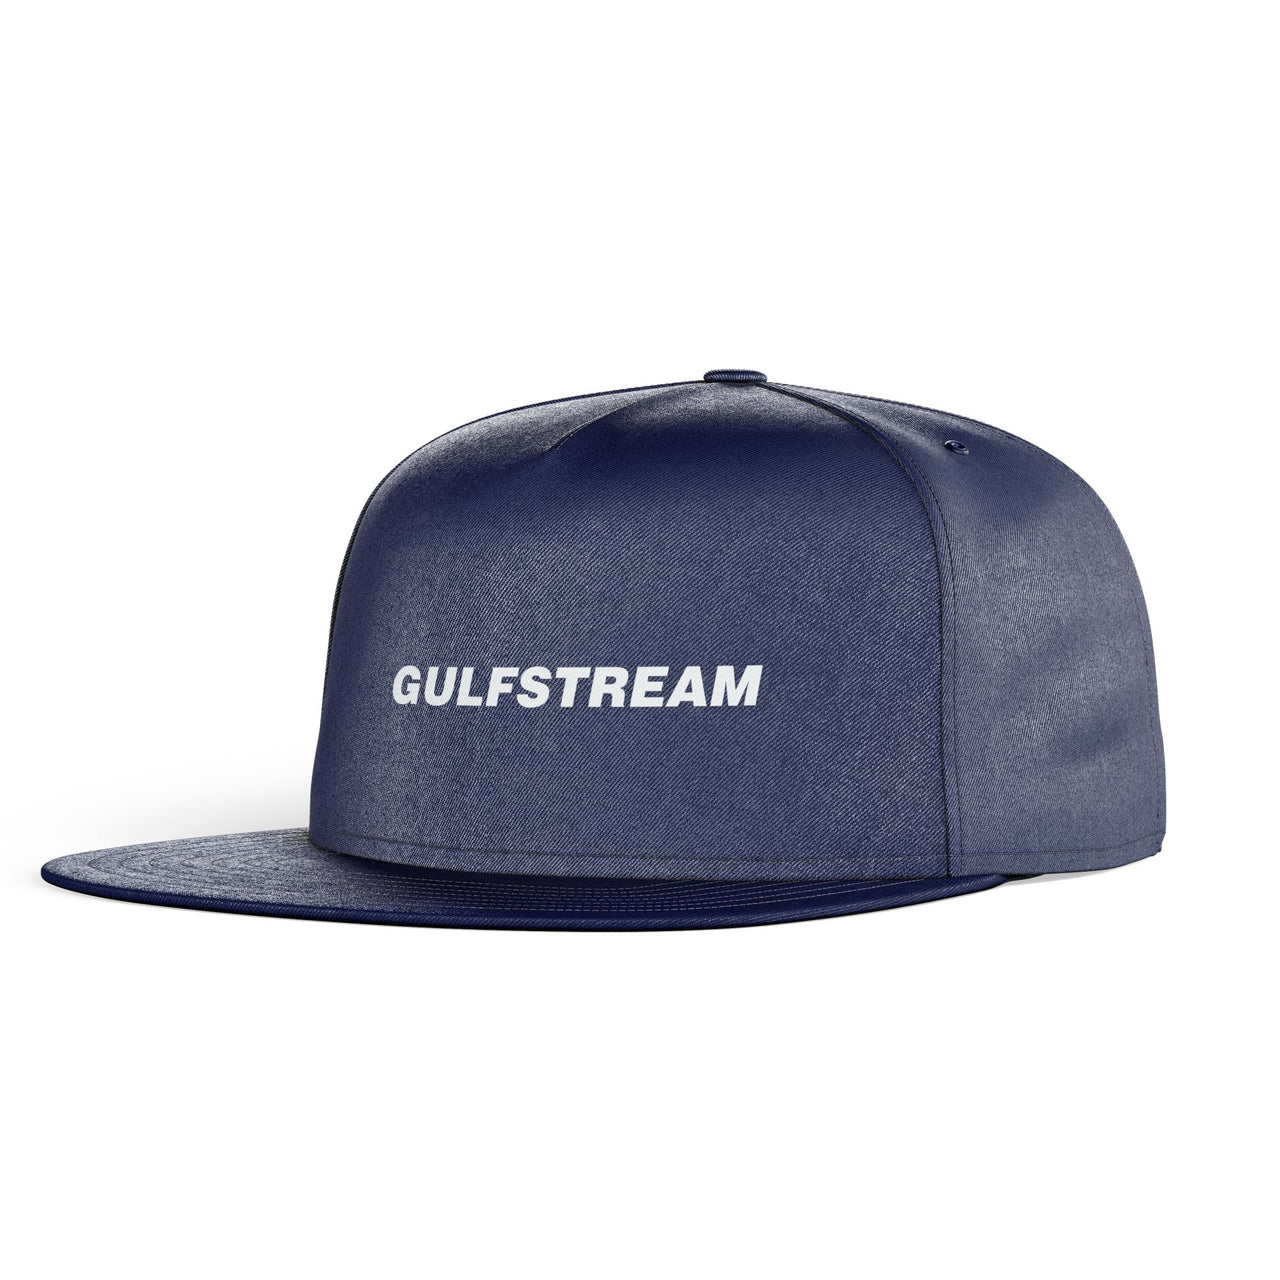 Gulfstream & Text Designed Snapback Caps & Hats